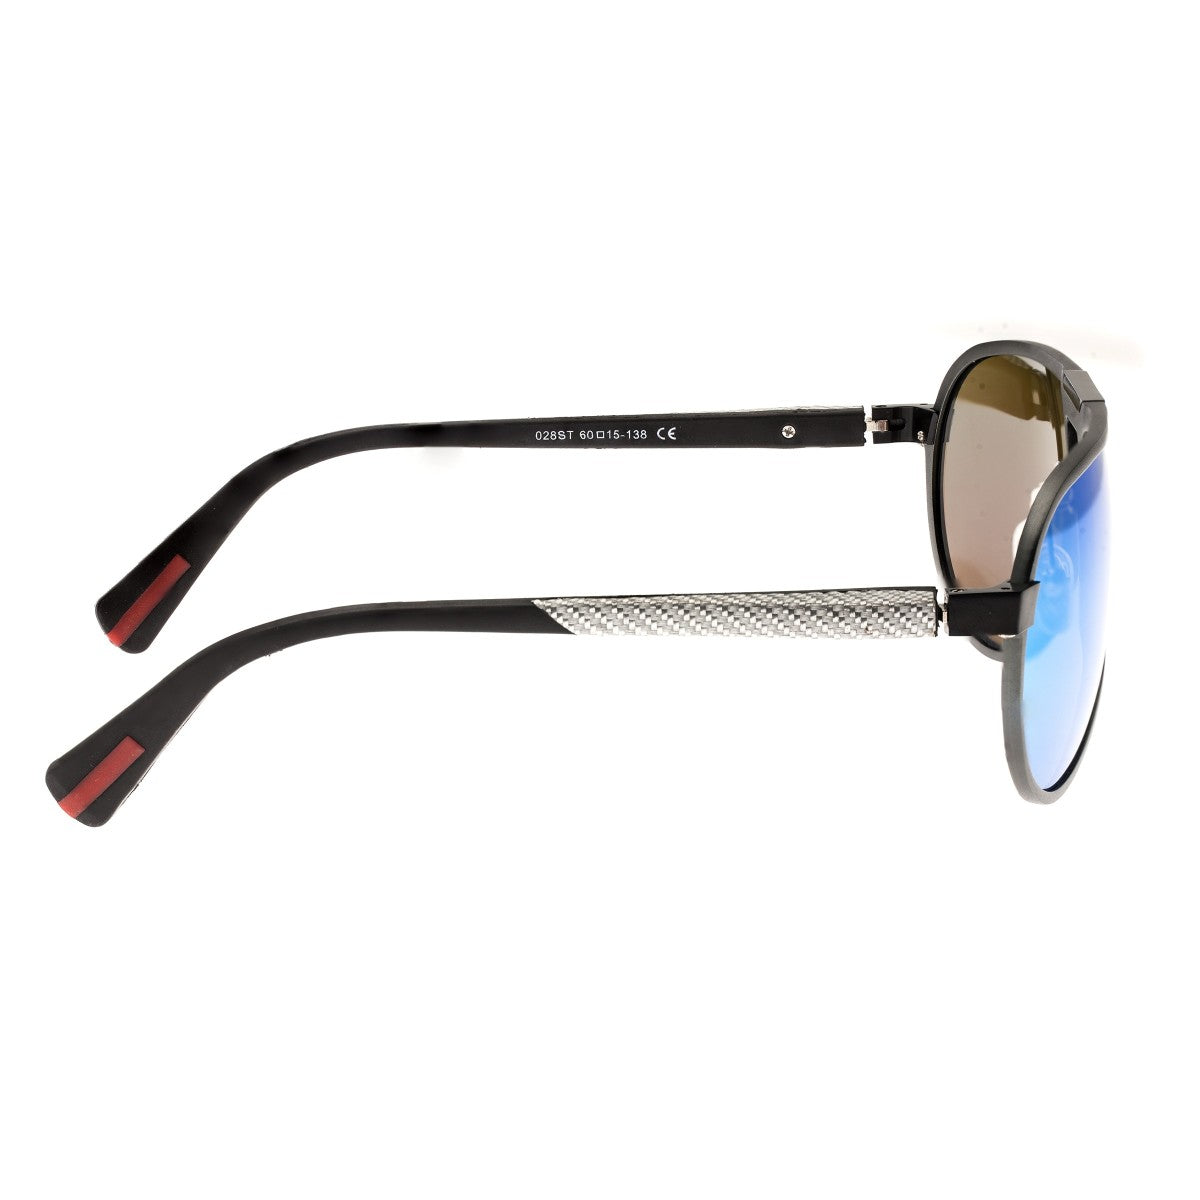 Breed Octans Titanium Polarized Sunglasses - Gunmetal/Green - BSG028ST